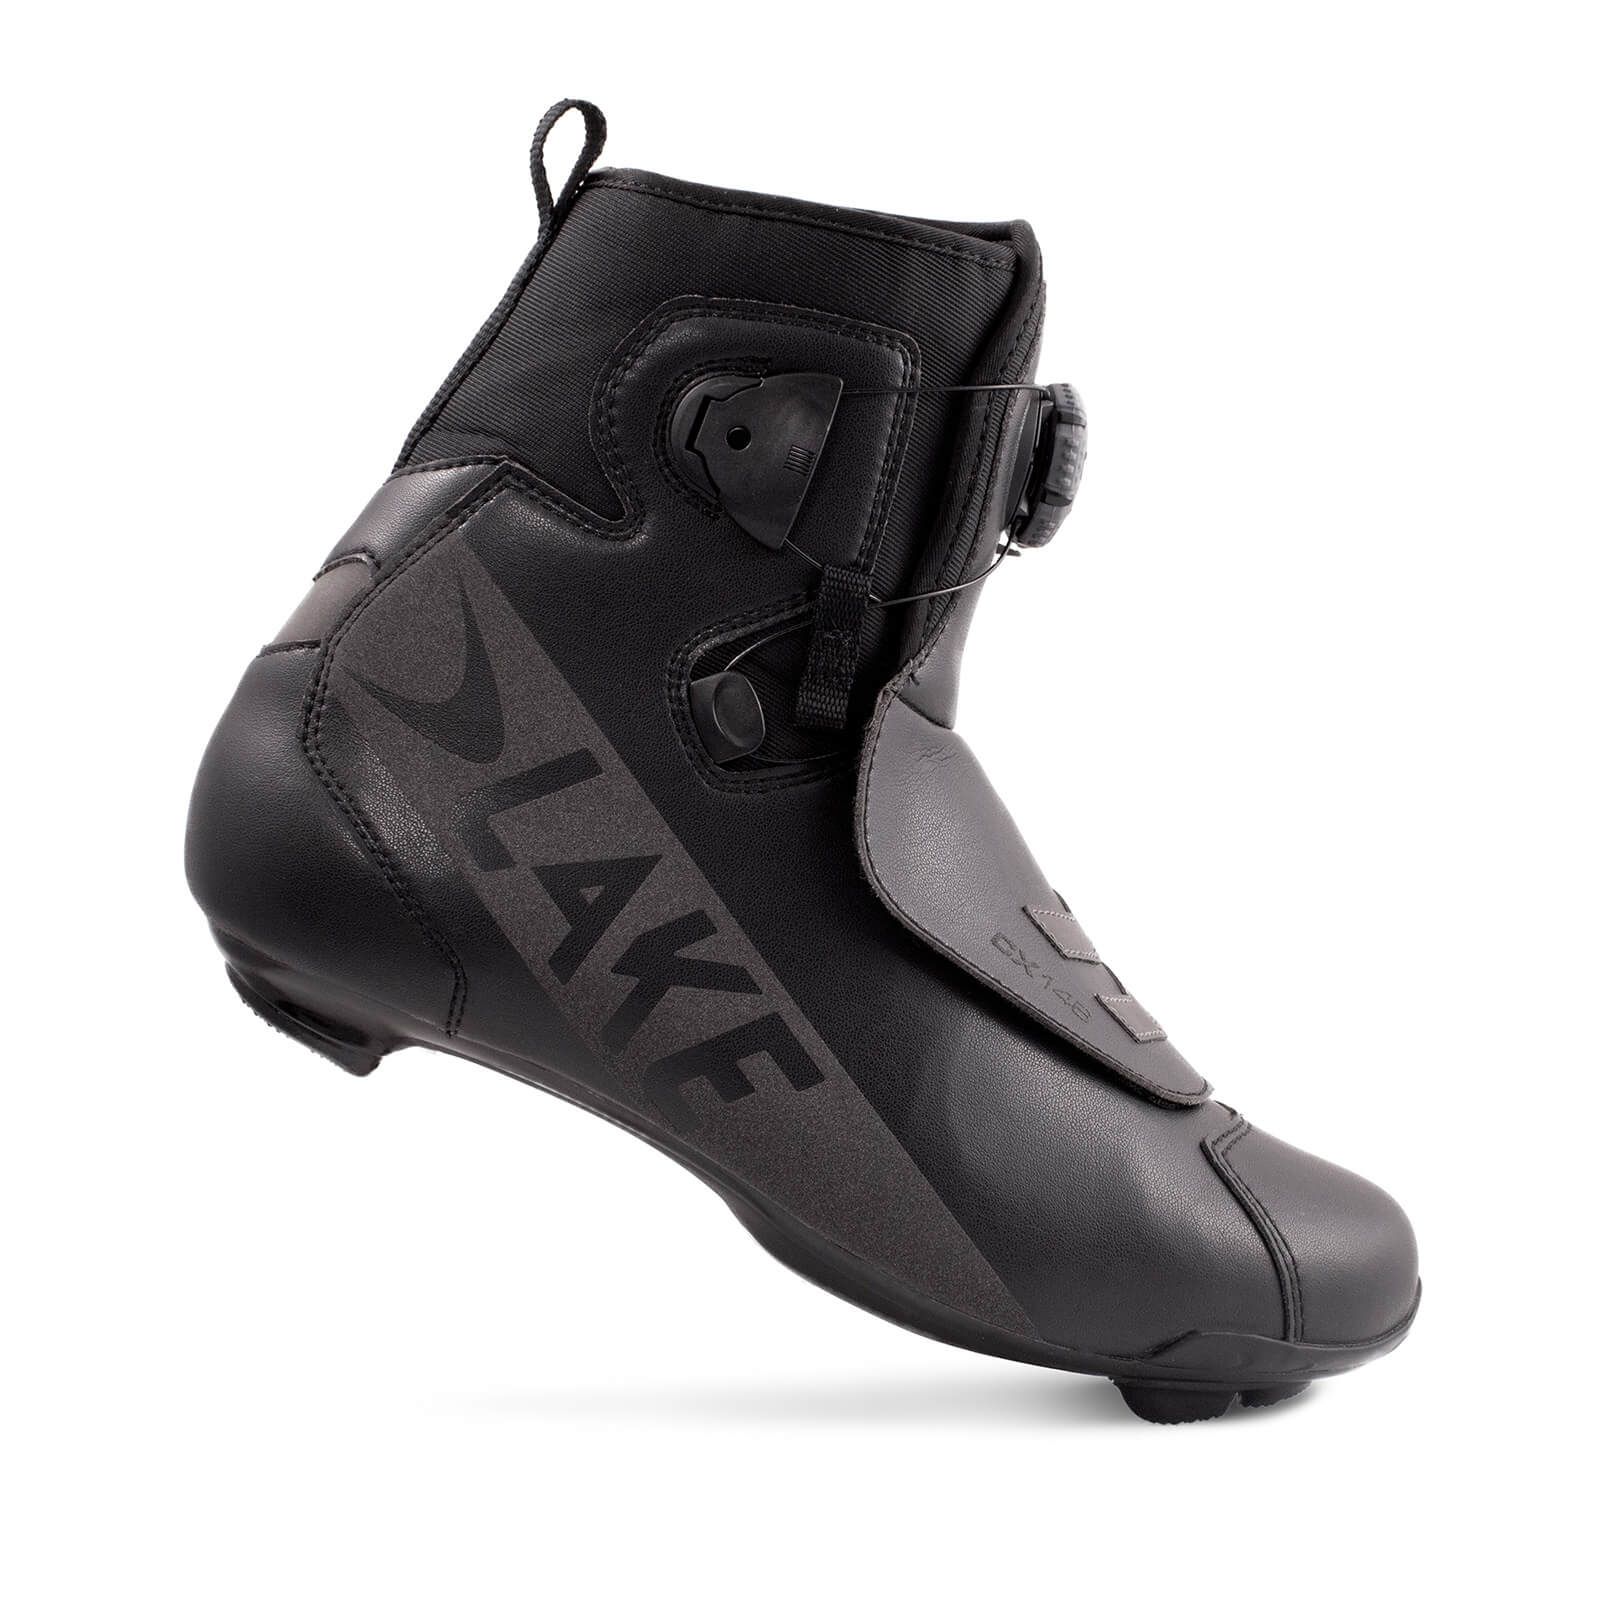 Lake CX146 Road Shoes - EU44 - Black/Gum